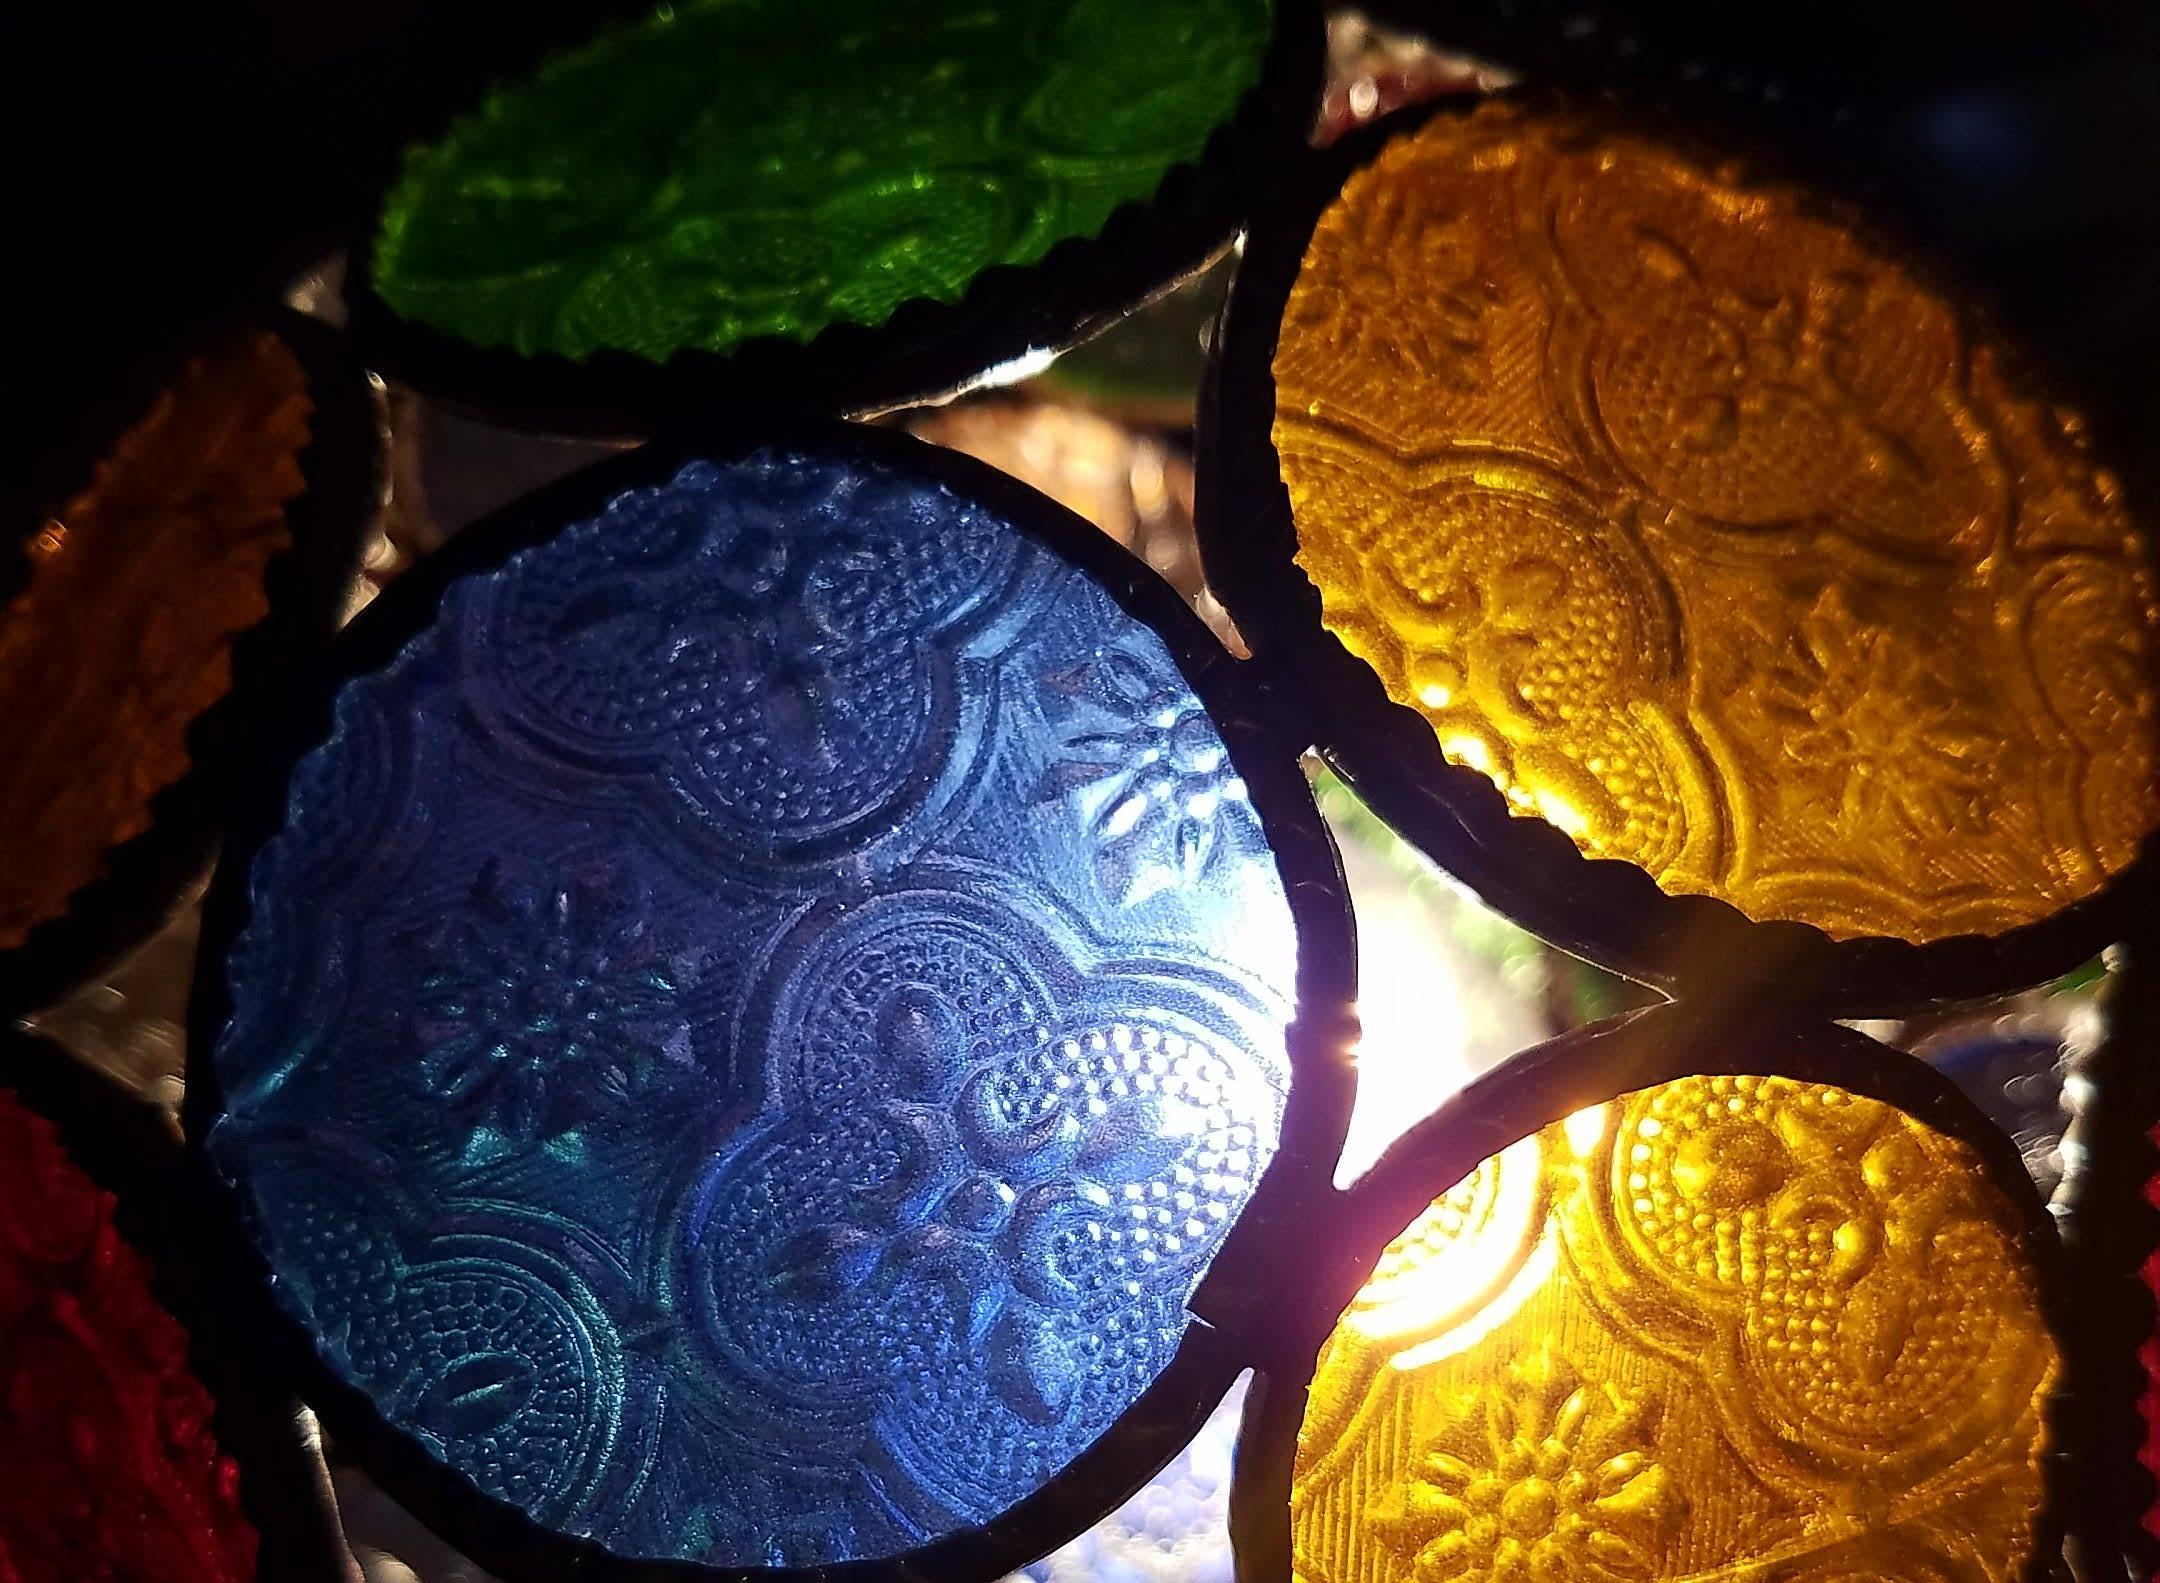 moroccan glass lanterns